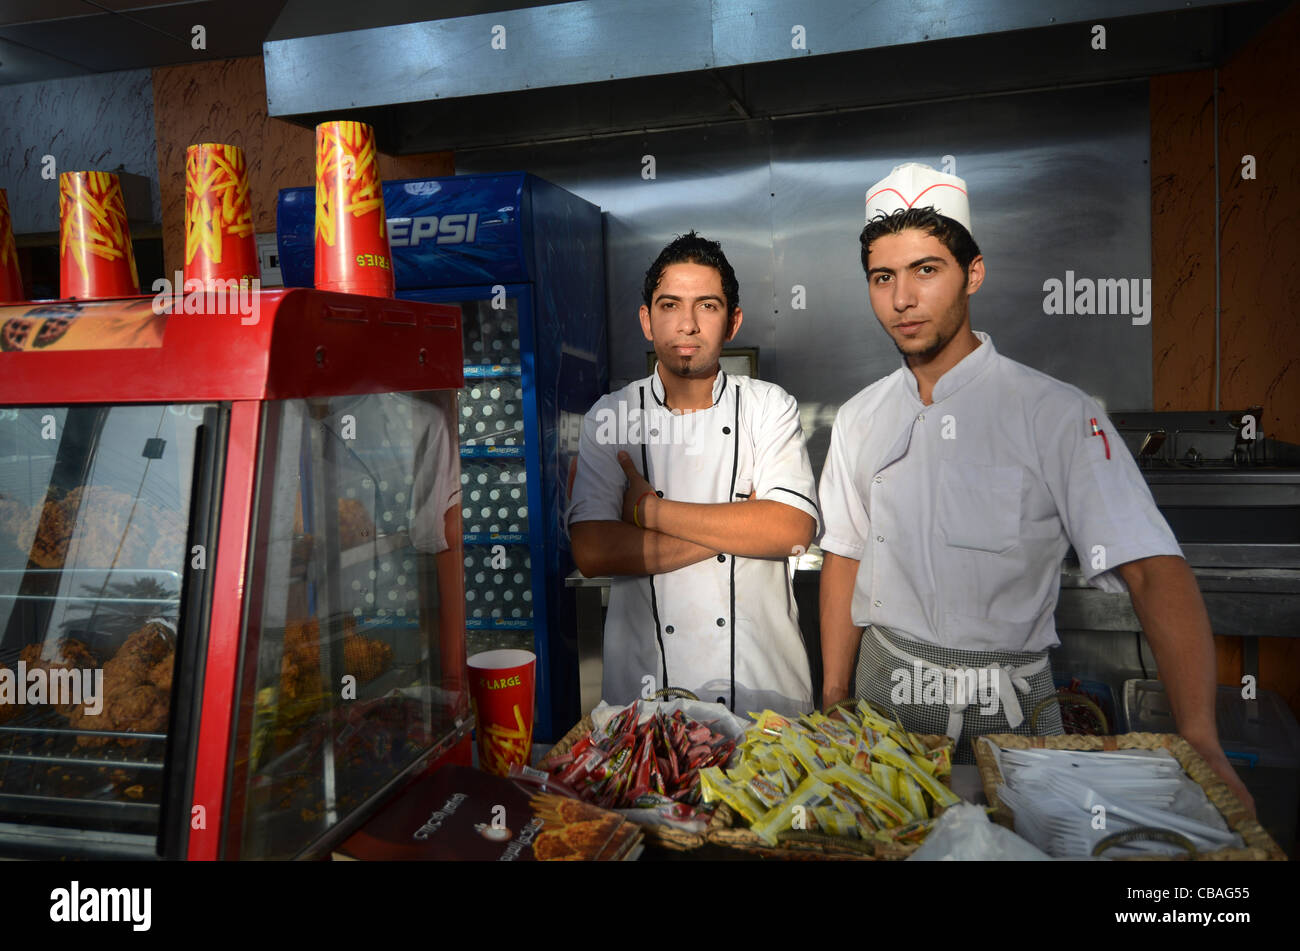 Bagdad, Irak, eine lokale Fast-Food-Restaurant, wo Brathähnchen "Kentucky" erinnert an KFC genannt Stockfoto